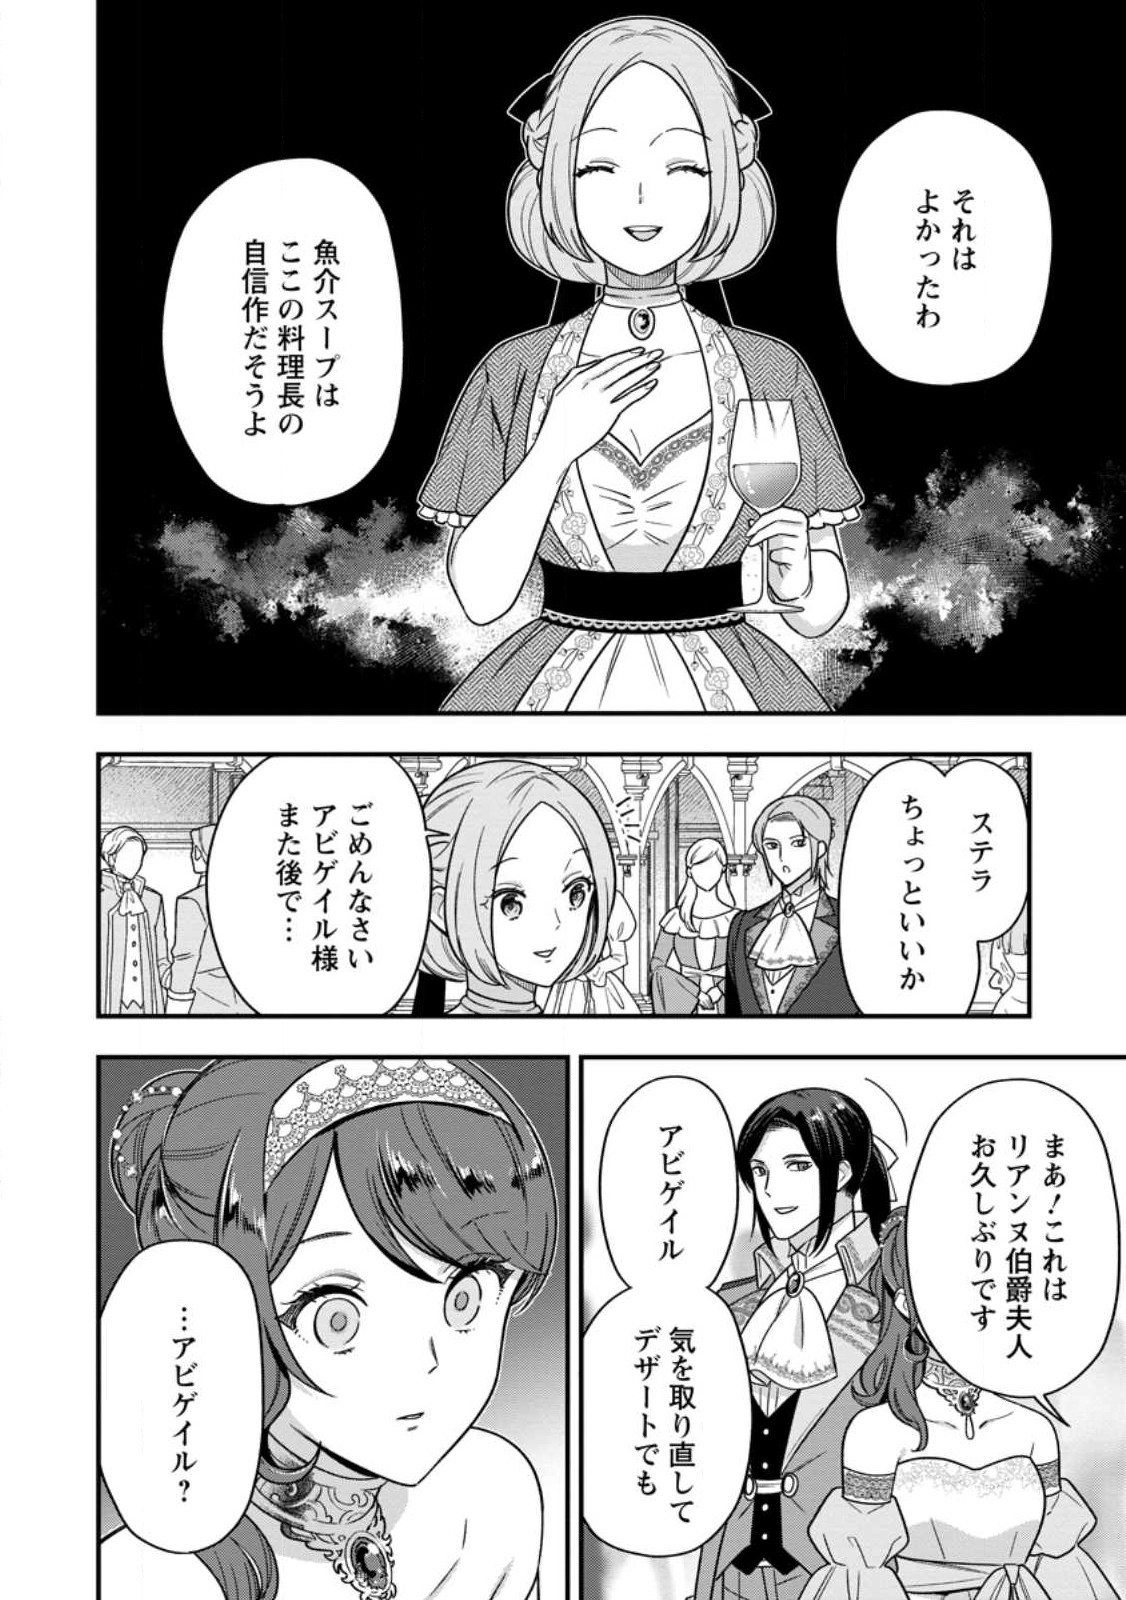 Aisanai to Iwaremashite mo - Chapter 12.3 - Page 2